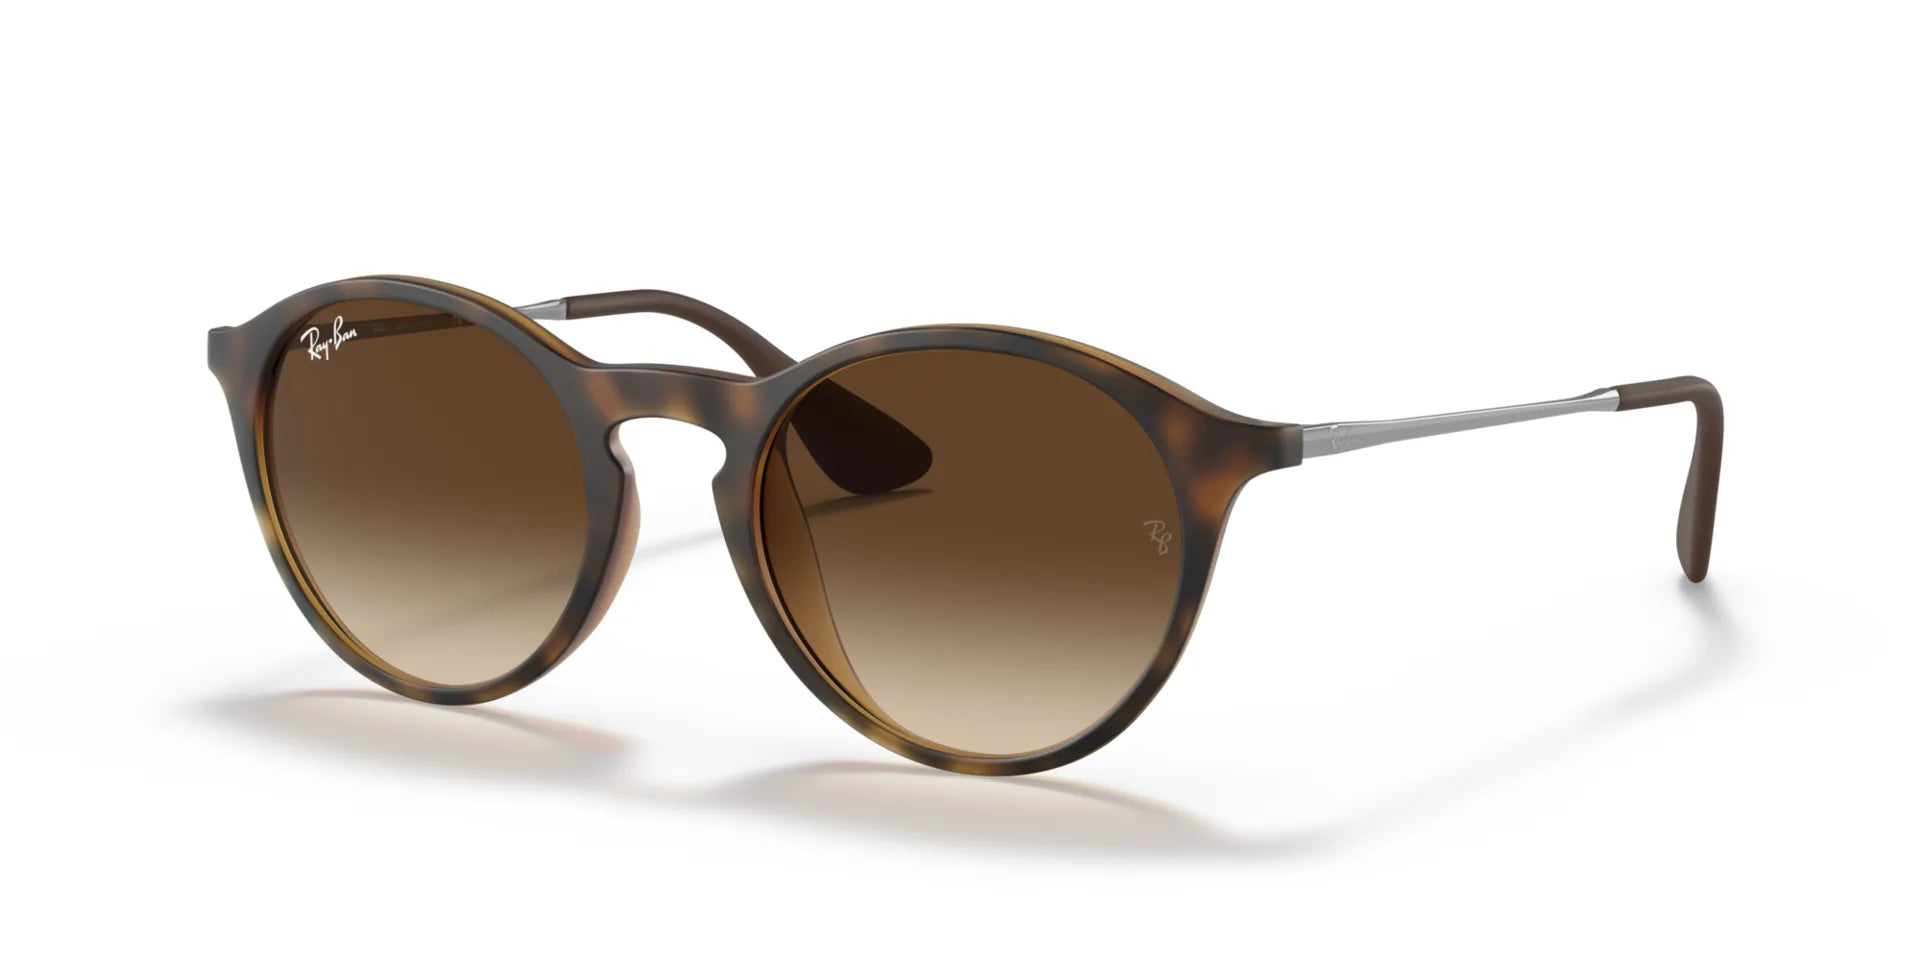 Ray-Ban RB4243 Sunglasses Havana / Brown Gradient Dark Brown